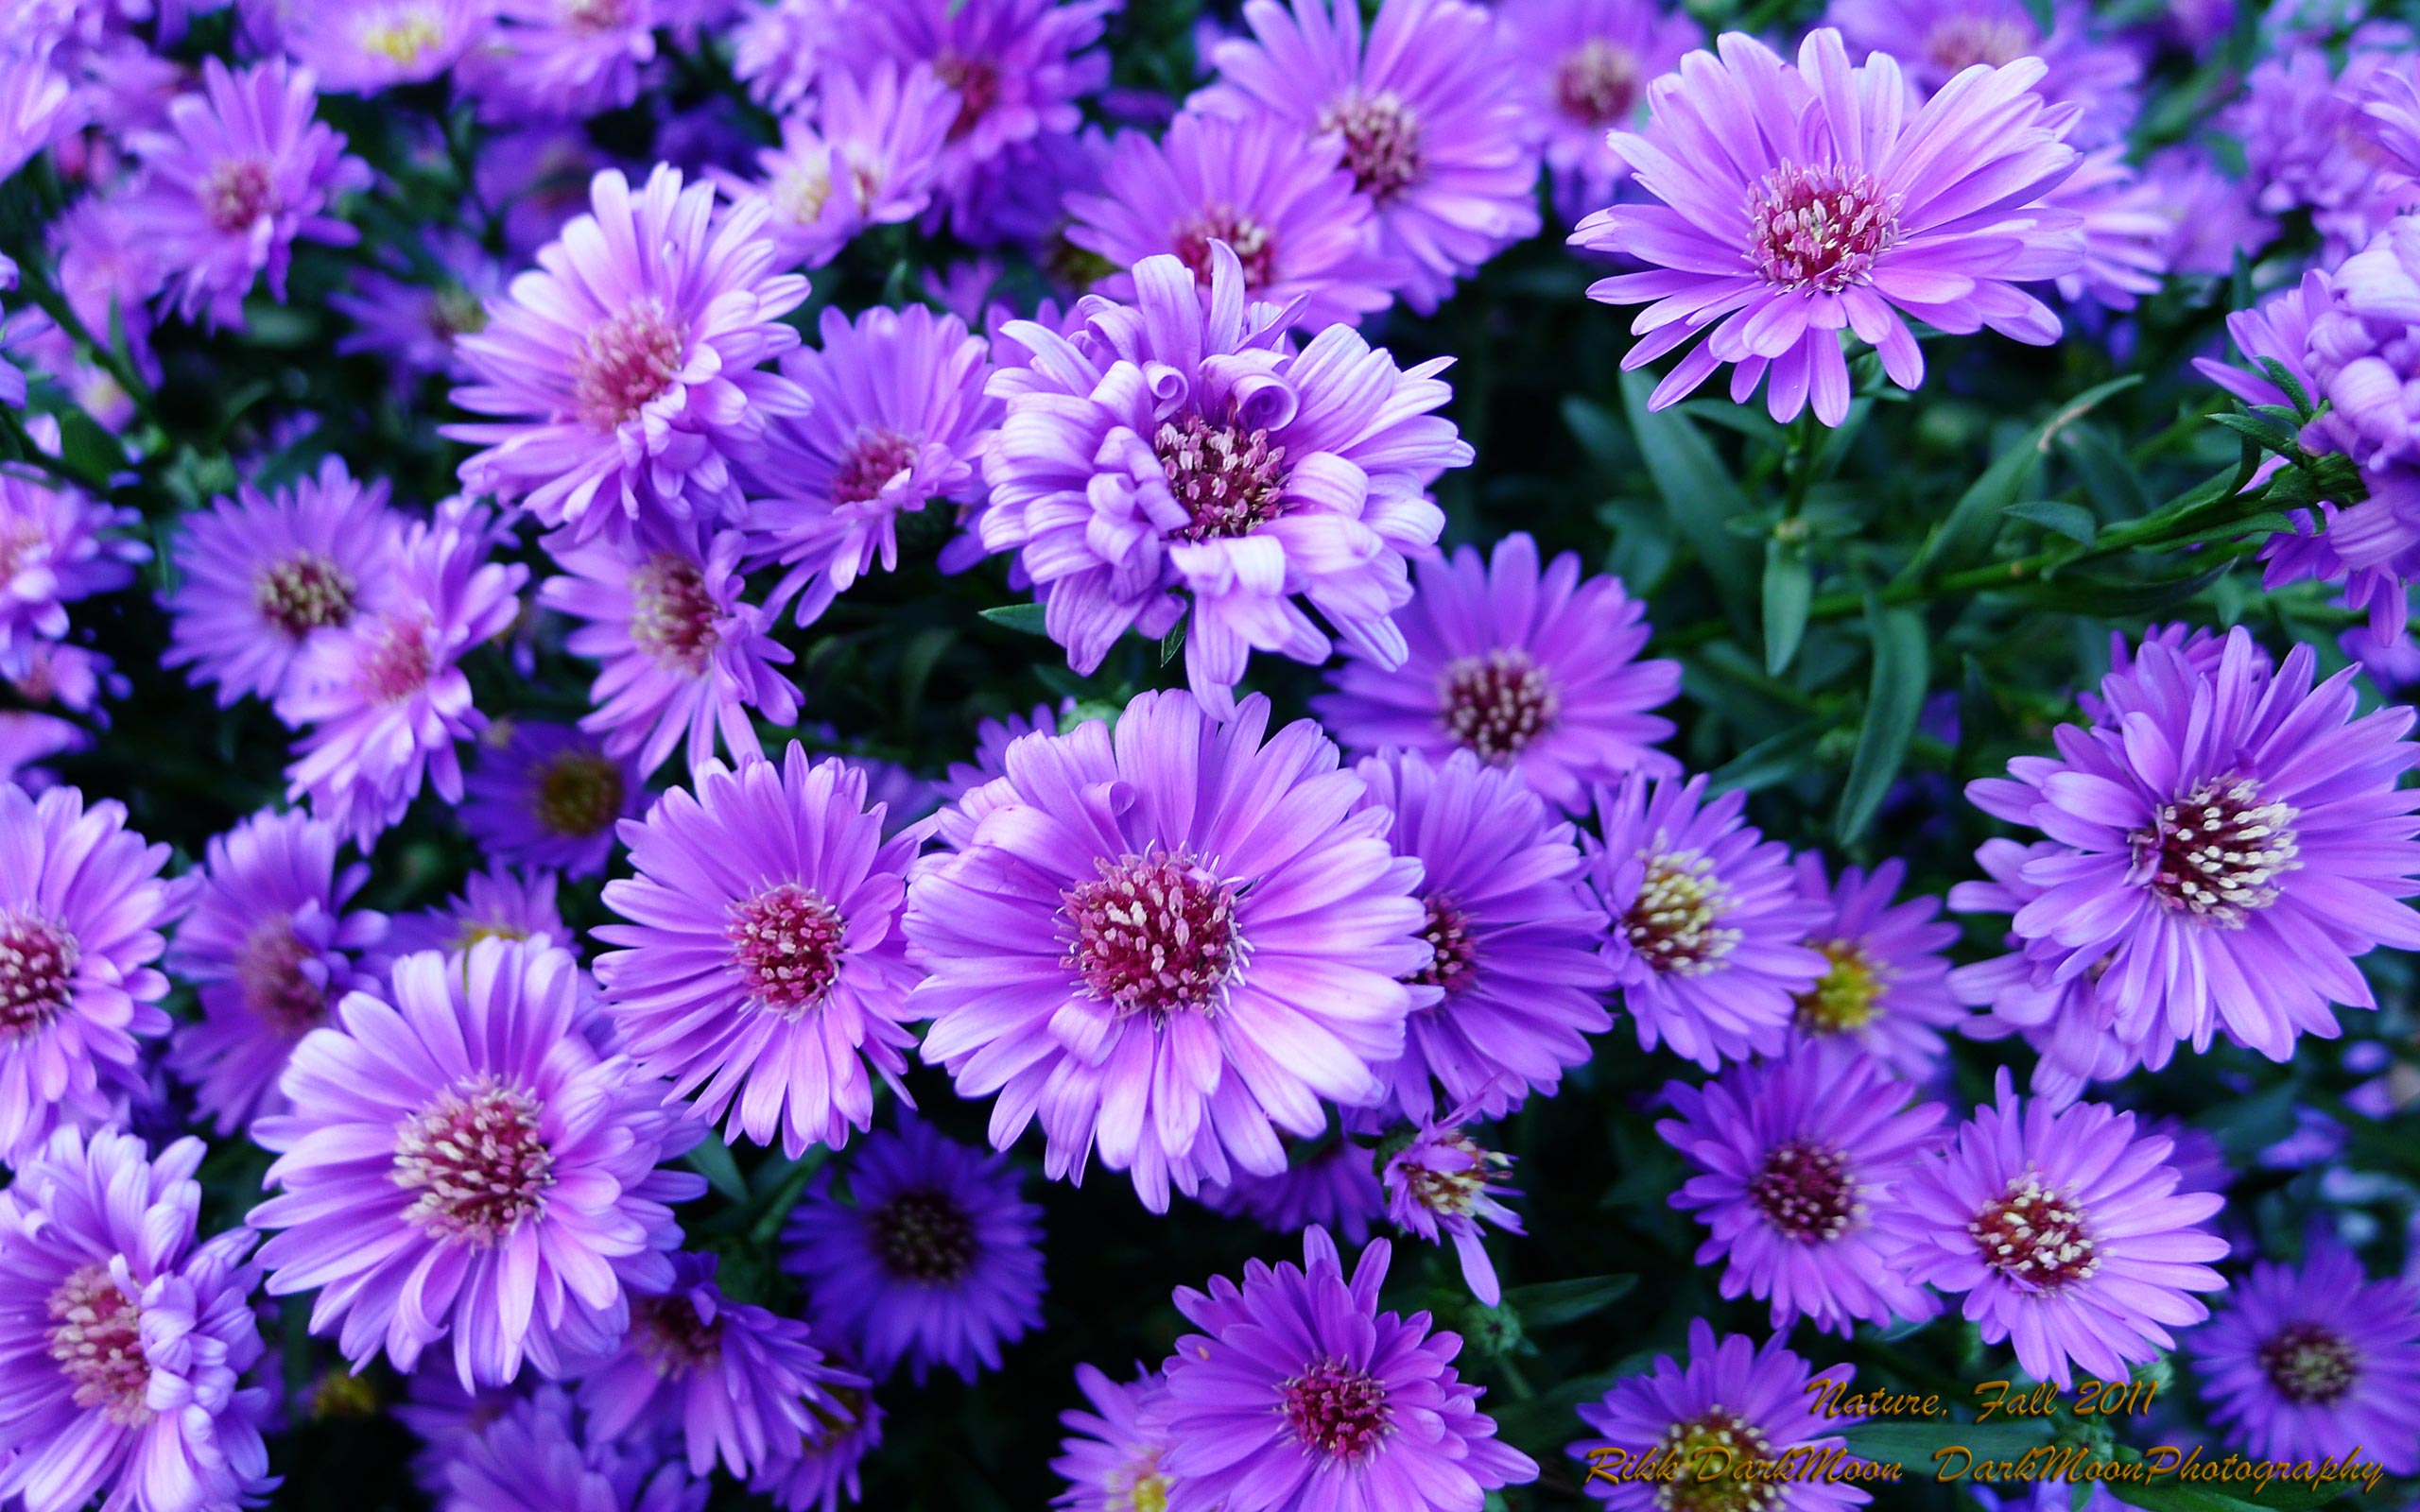  Flower  HD Wallpaper  Background Image 2560x1600 ID 